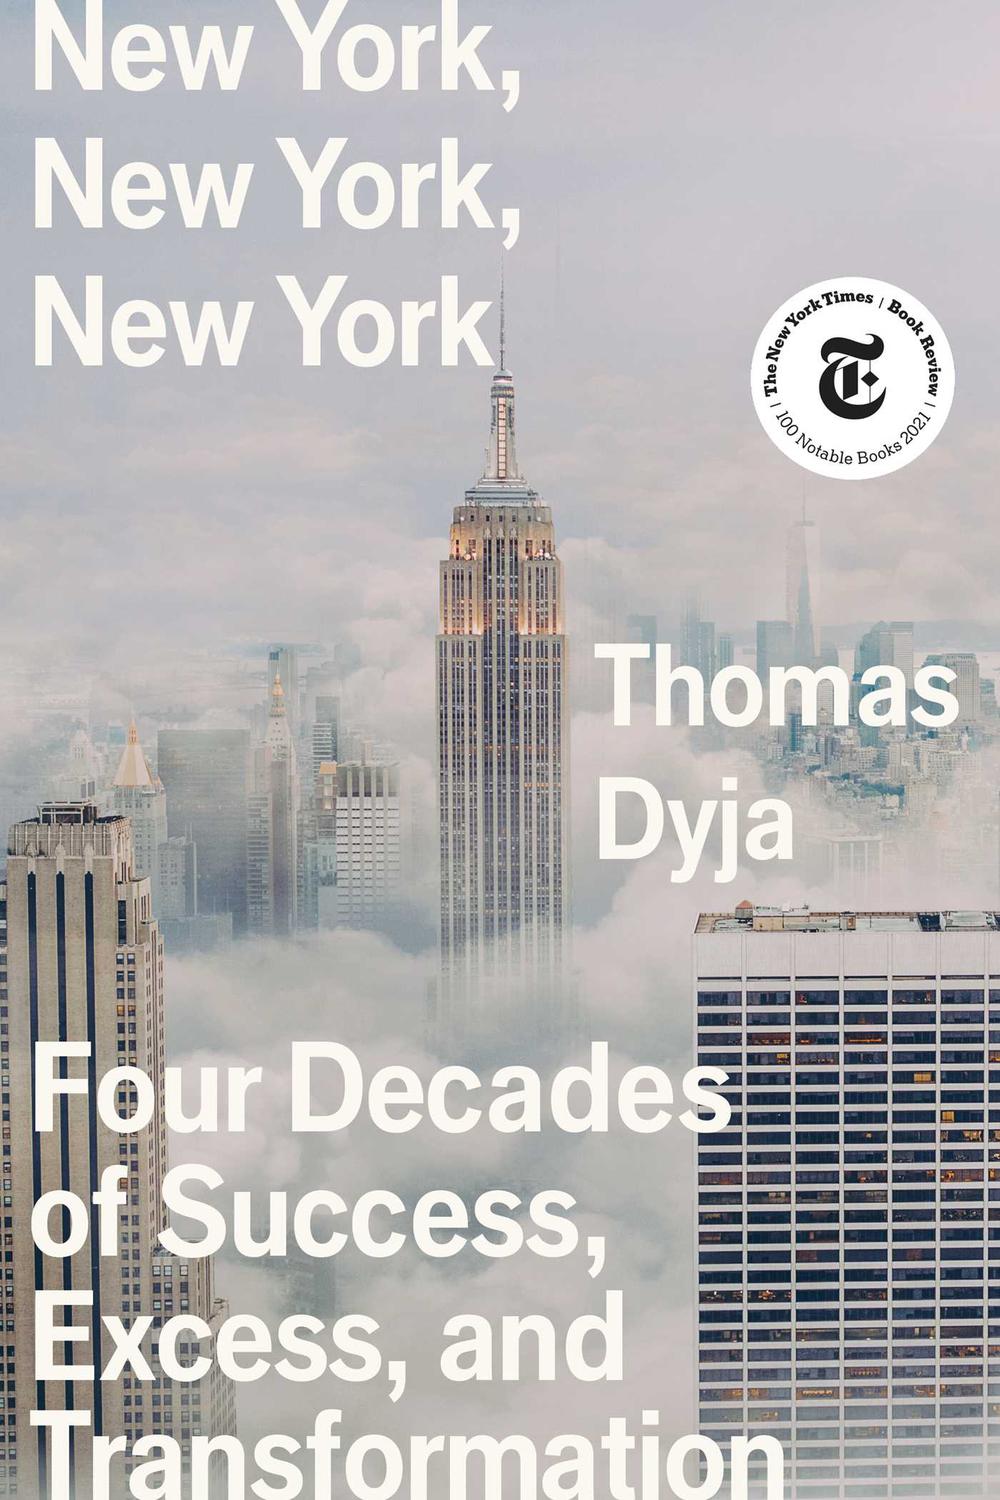 New York, New York, New York - Thomas Dyja